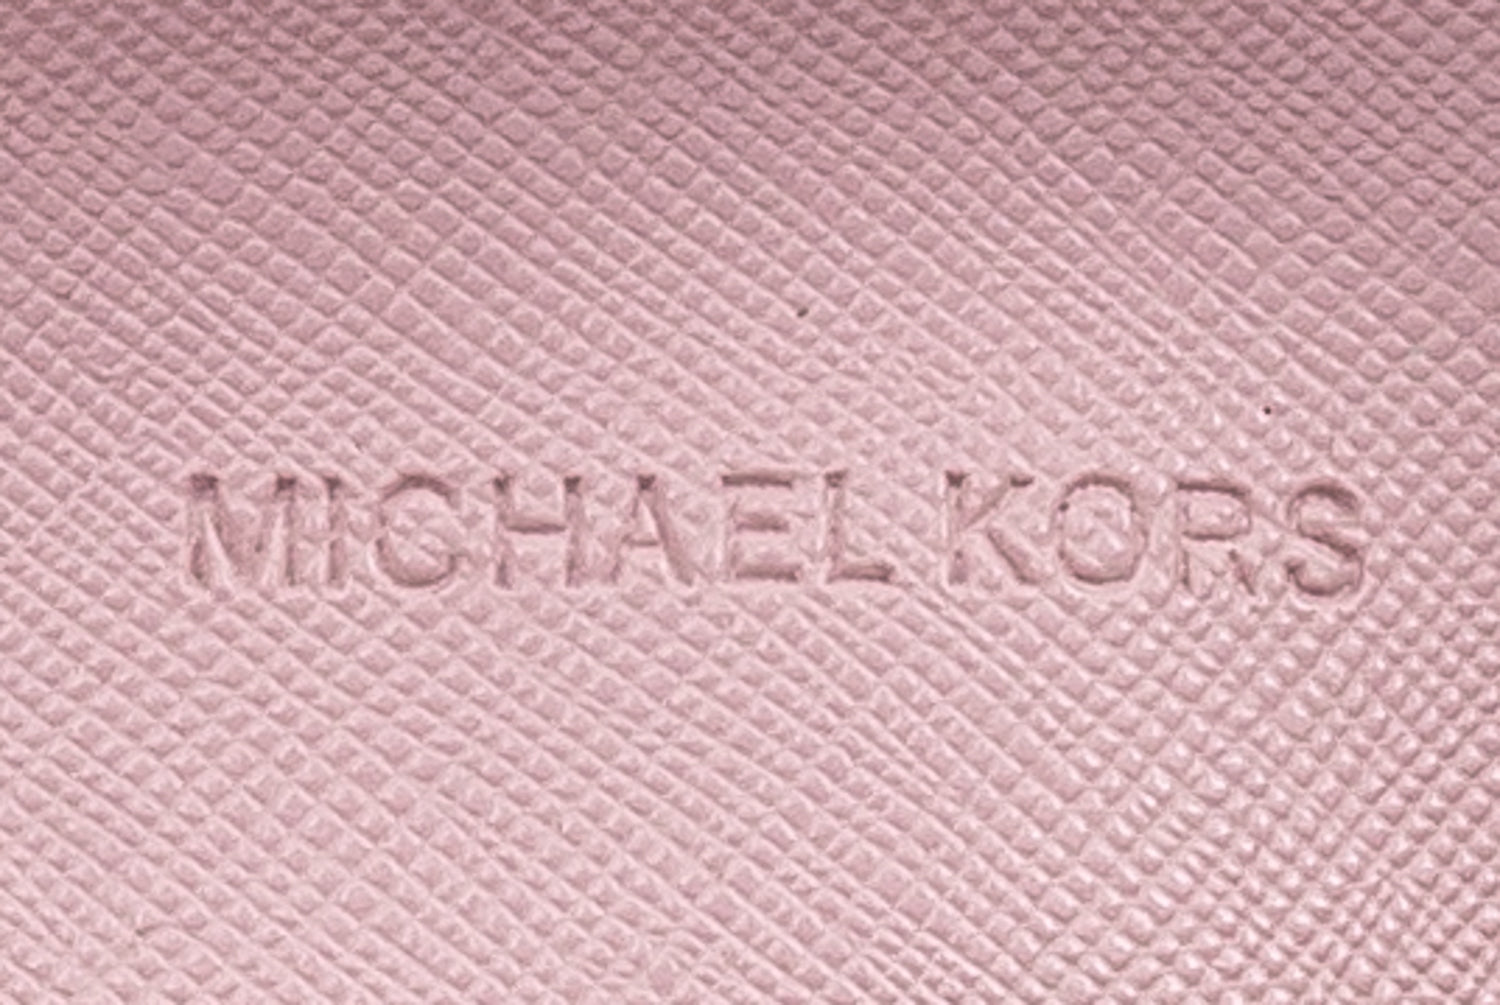 Michael Kors Pink Clutch